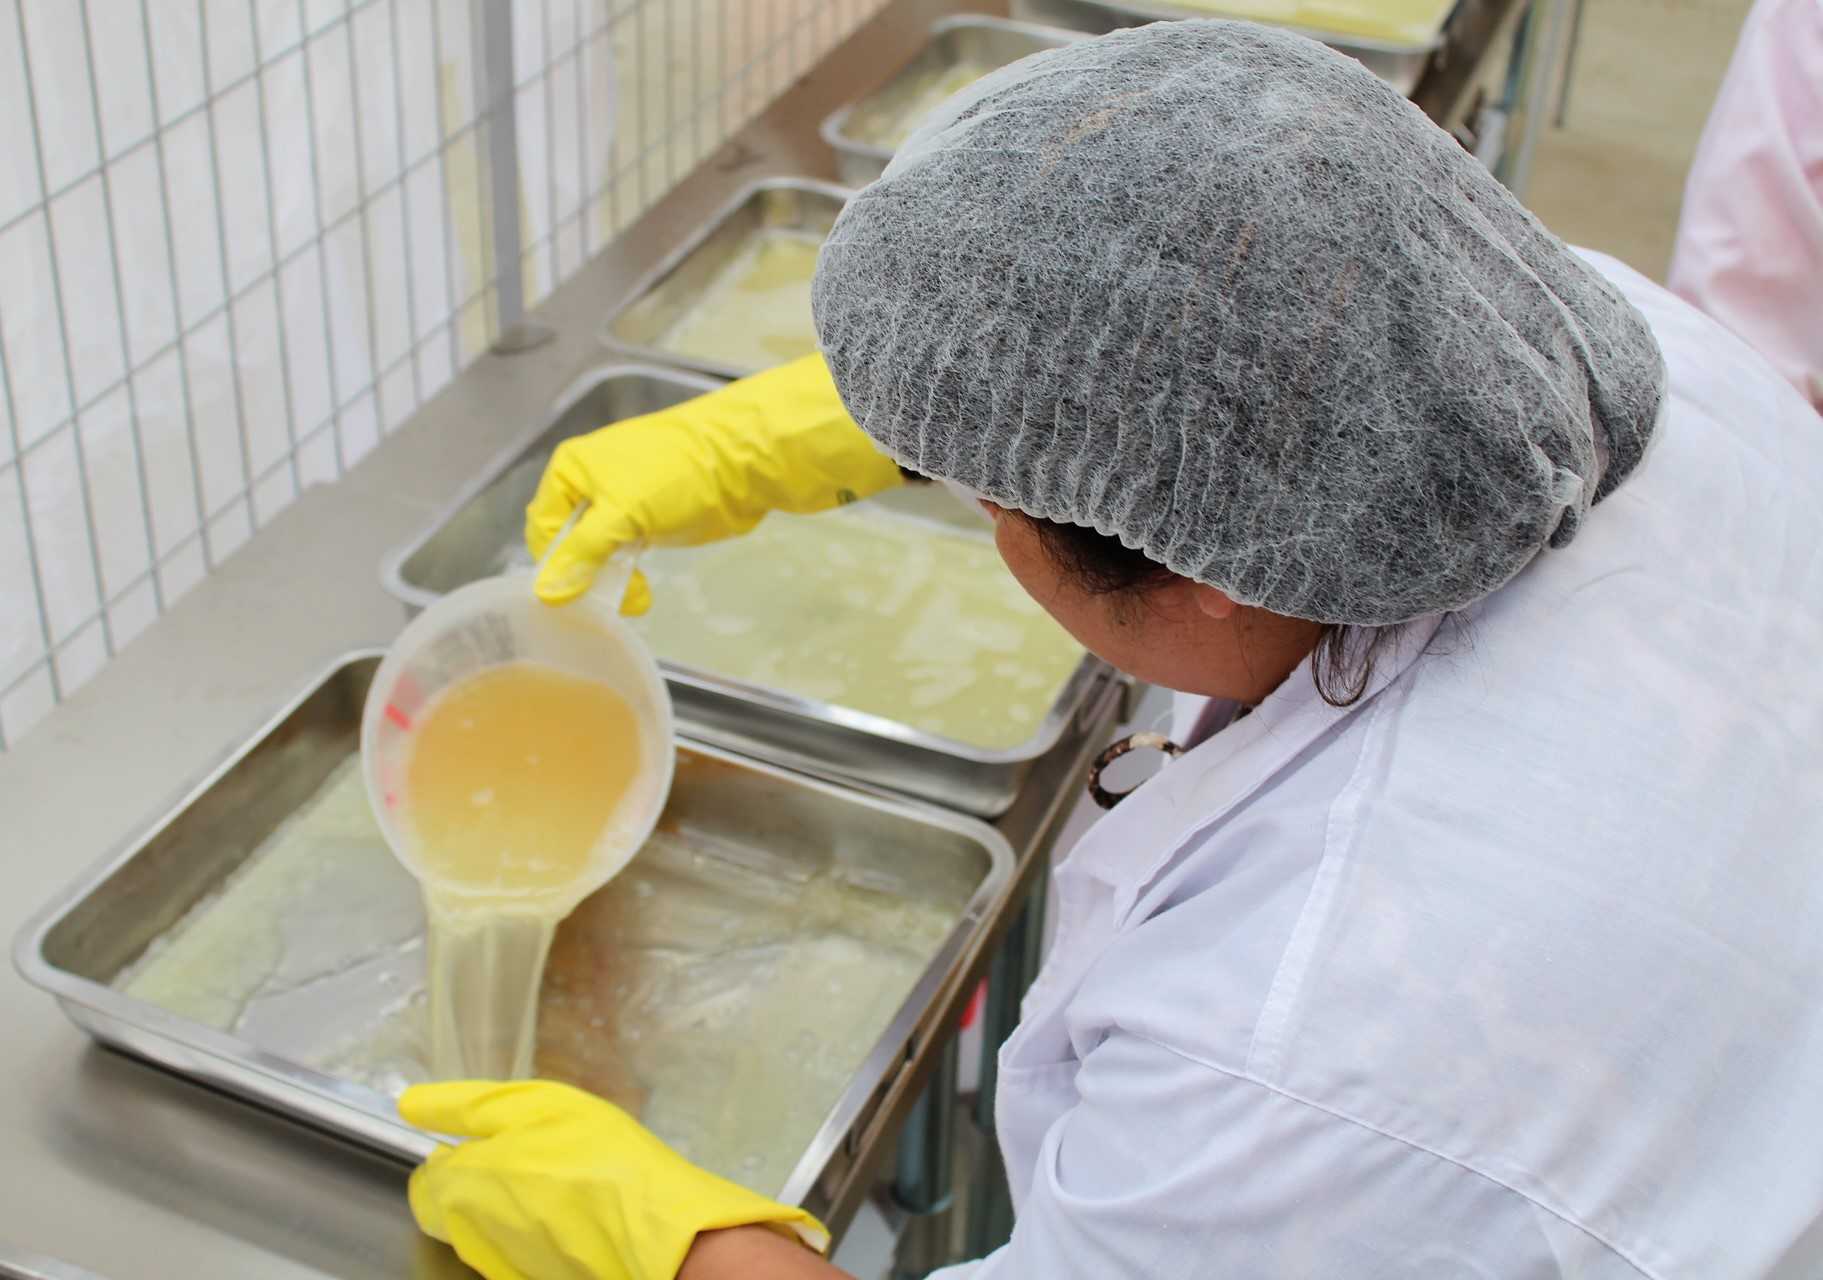 En base a agar-agar orgánico: Algueras chilotas avanzan en producción de dulces artesanales